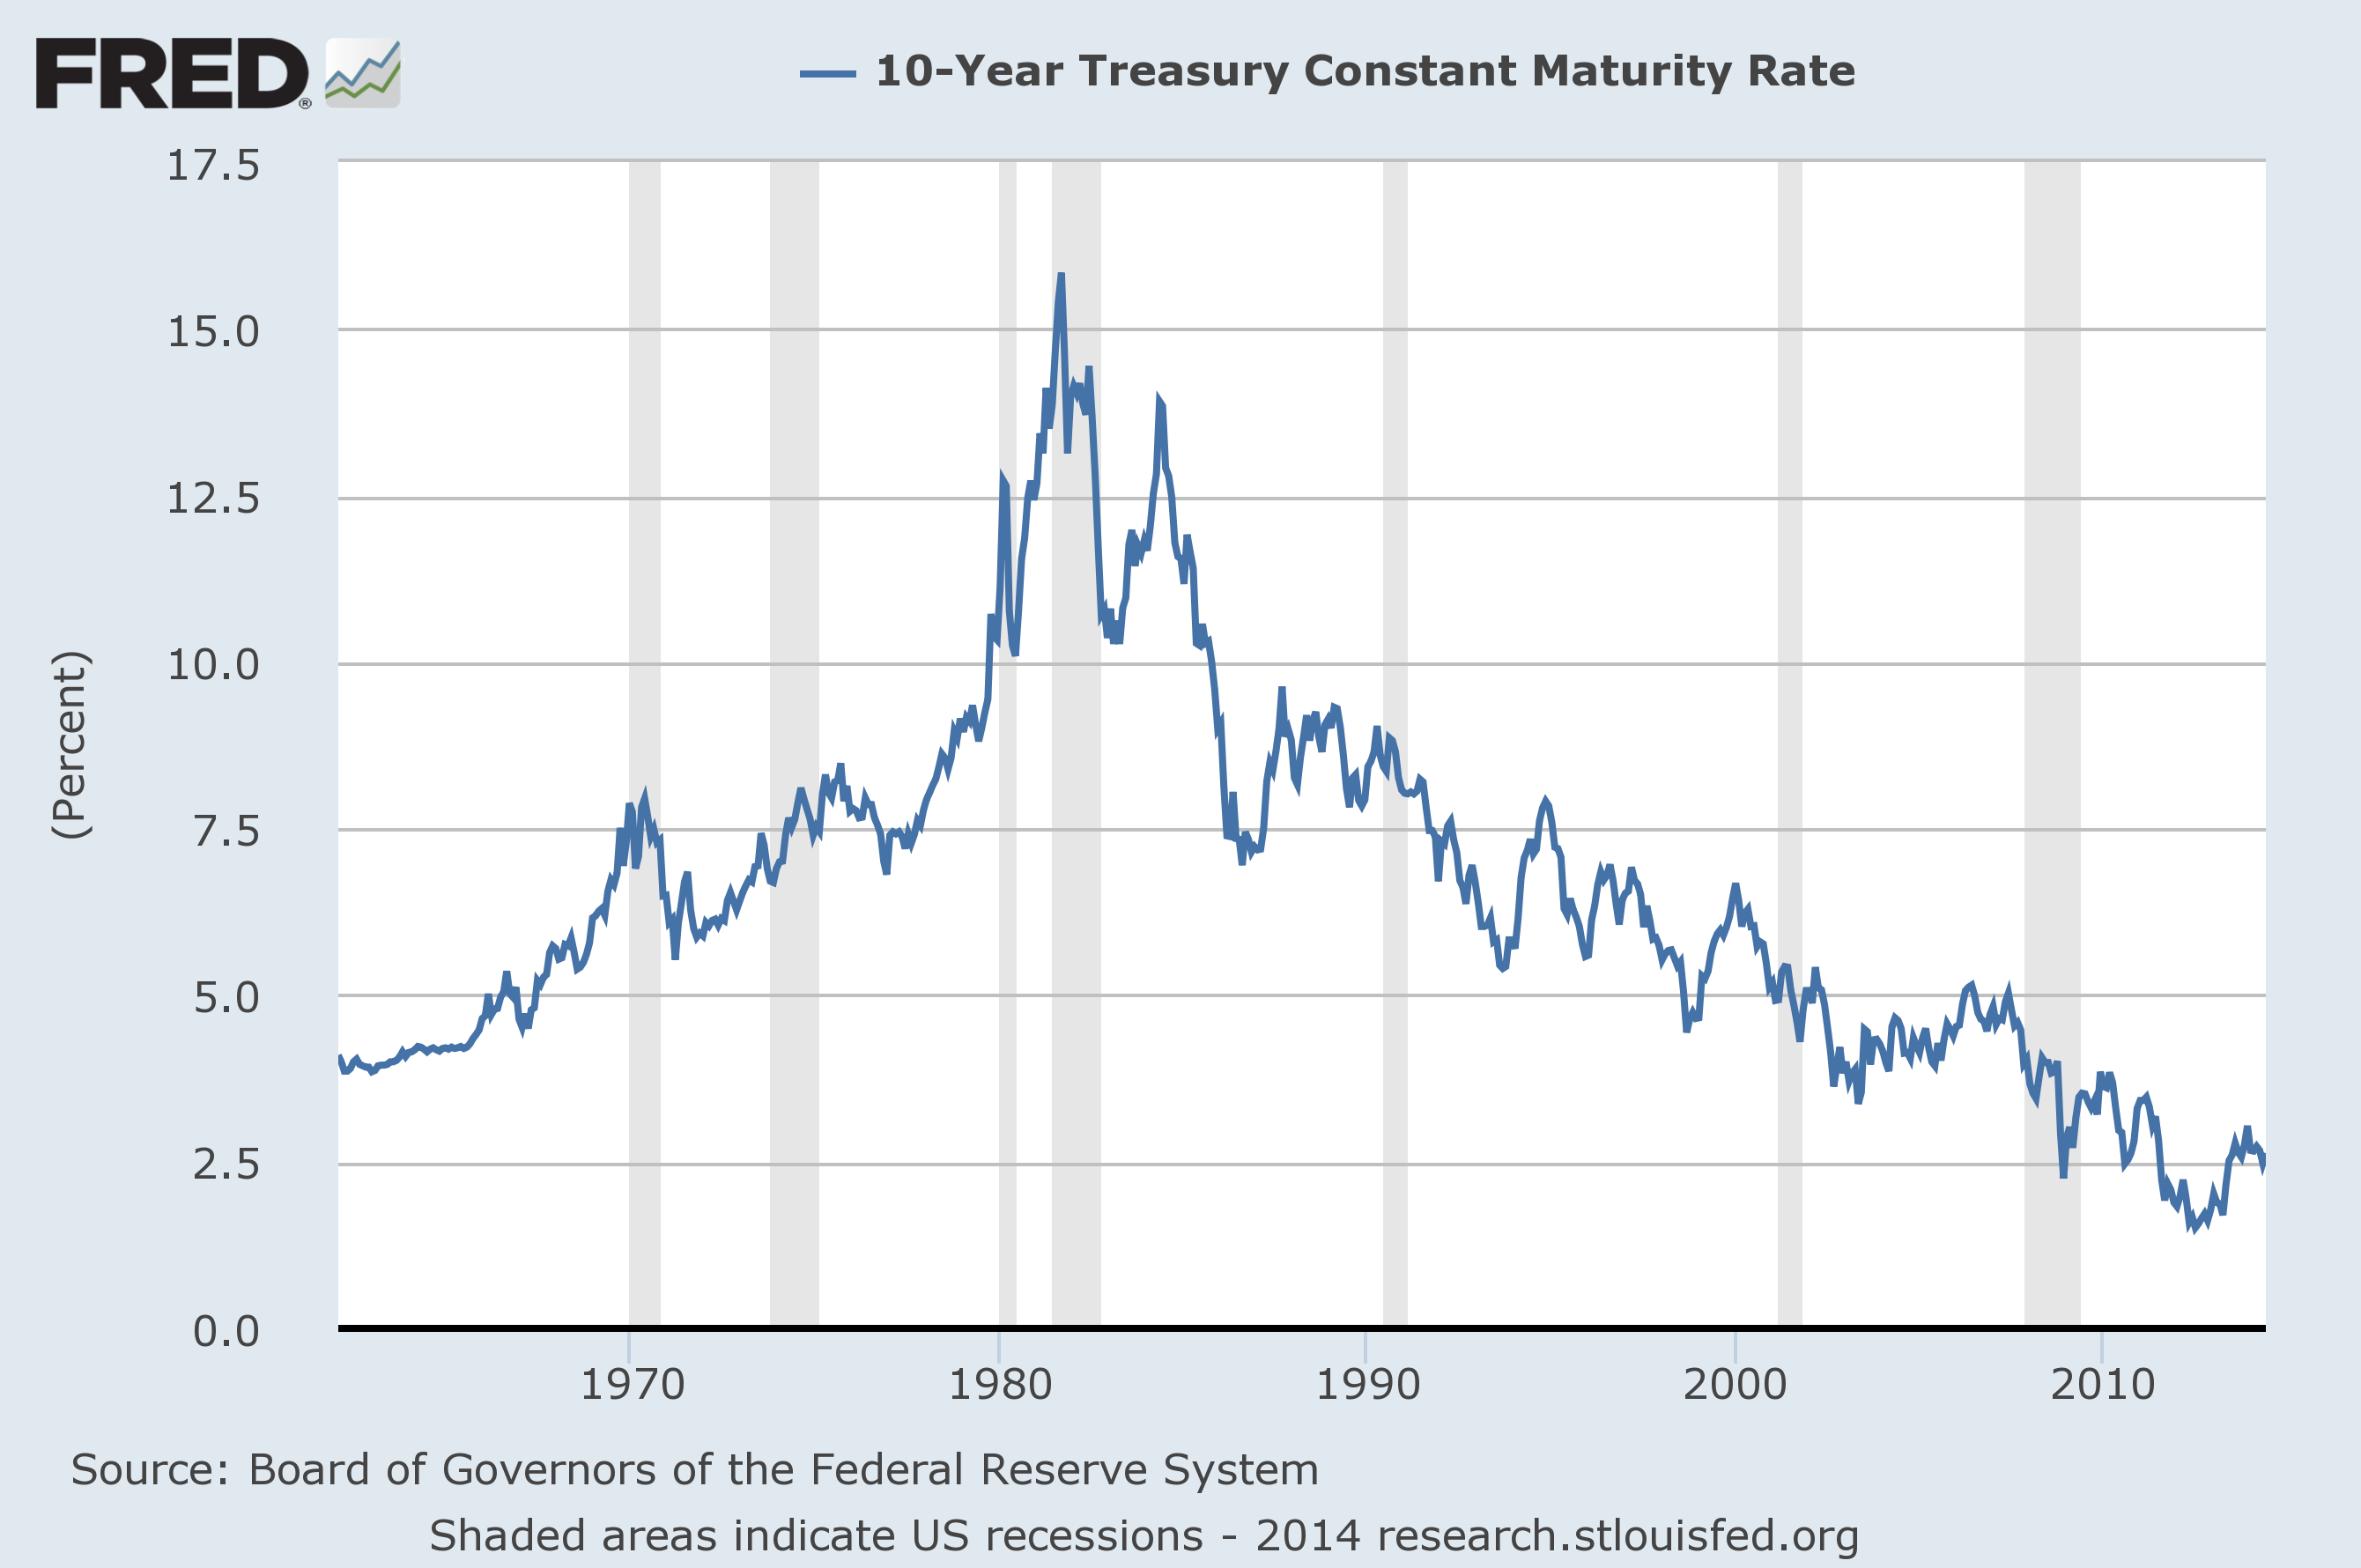 10 Year Treasury Yield Chart 2014